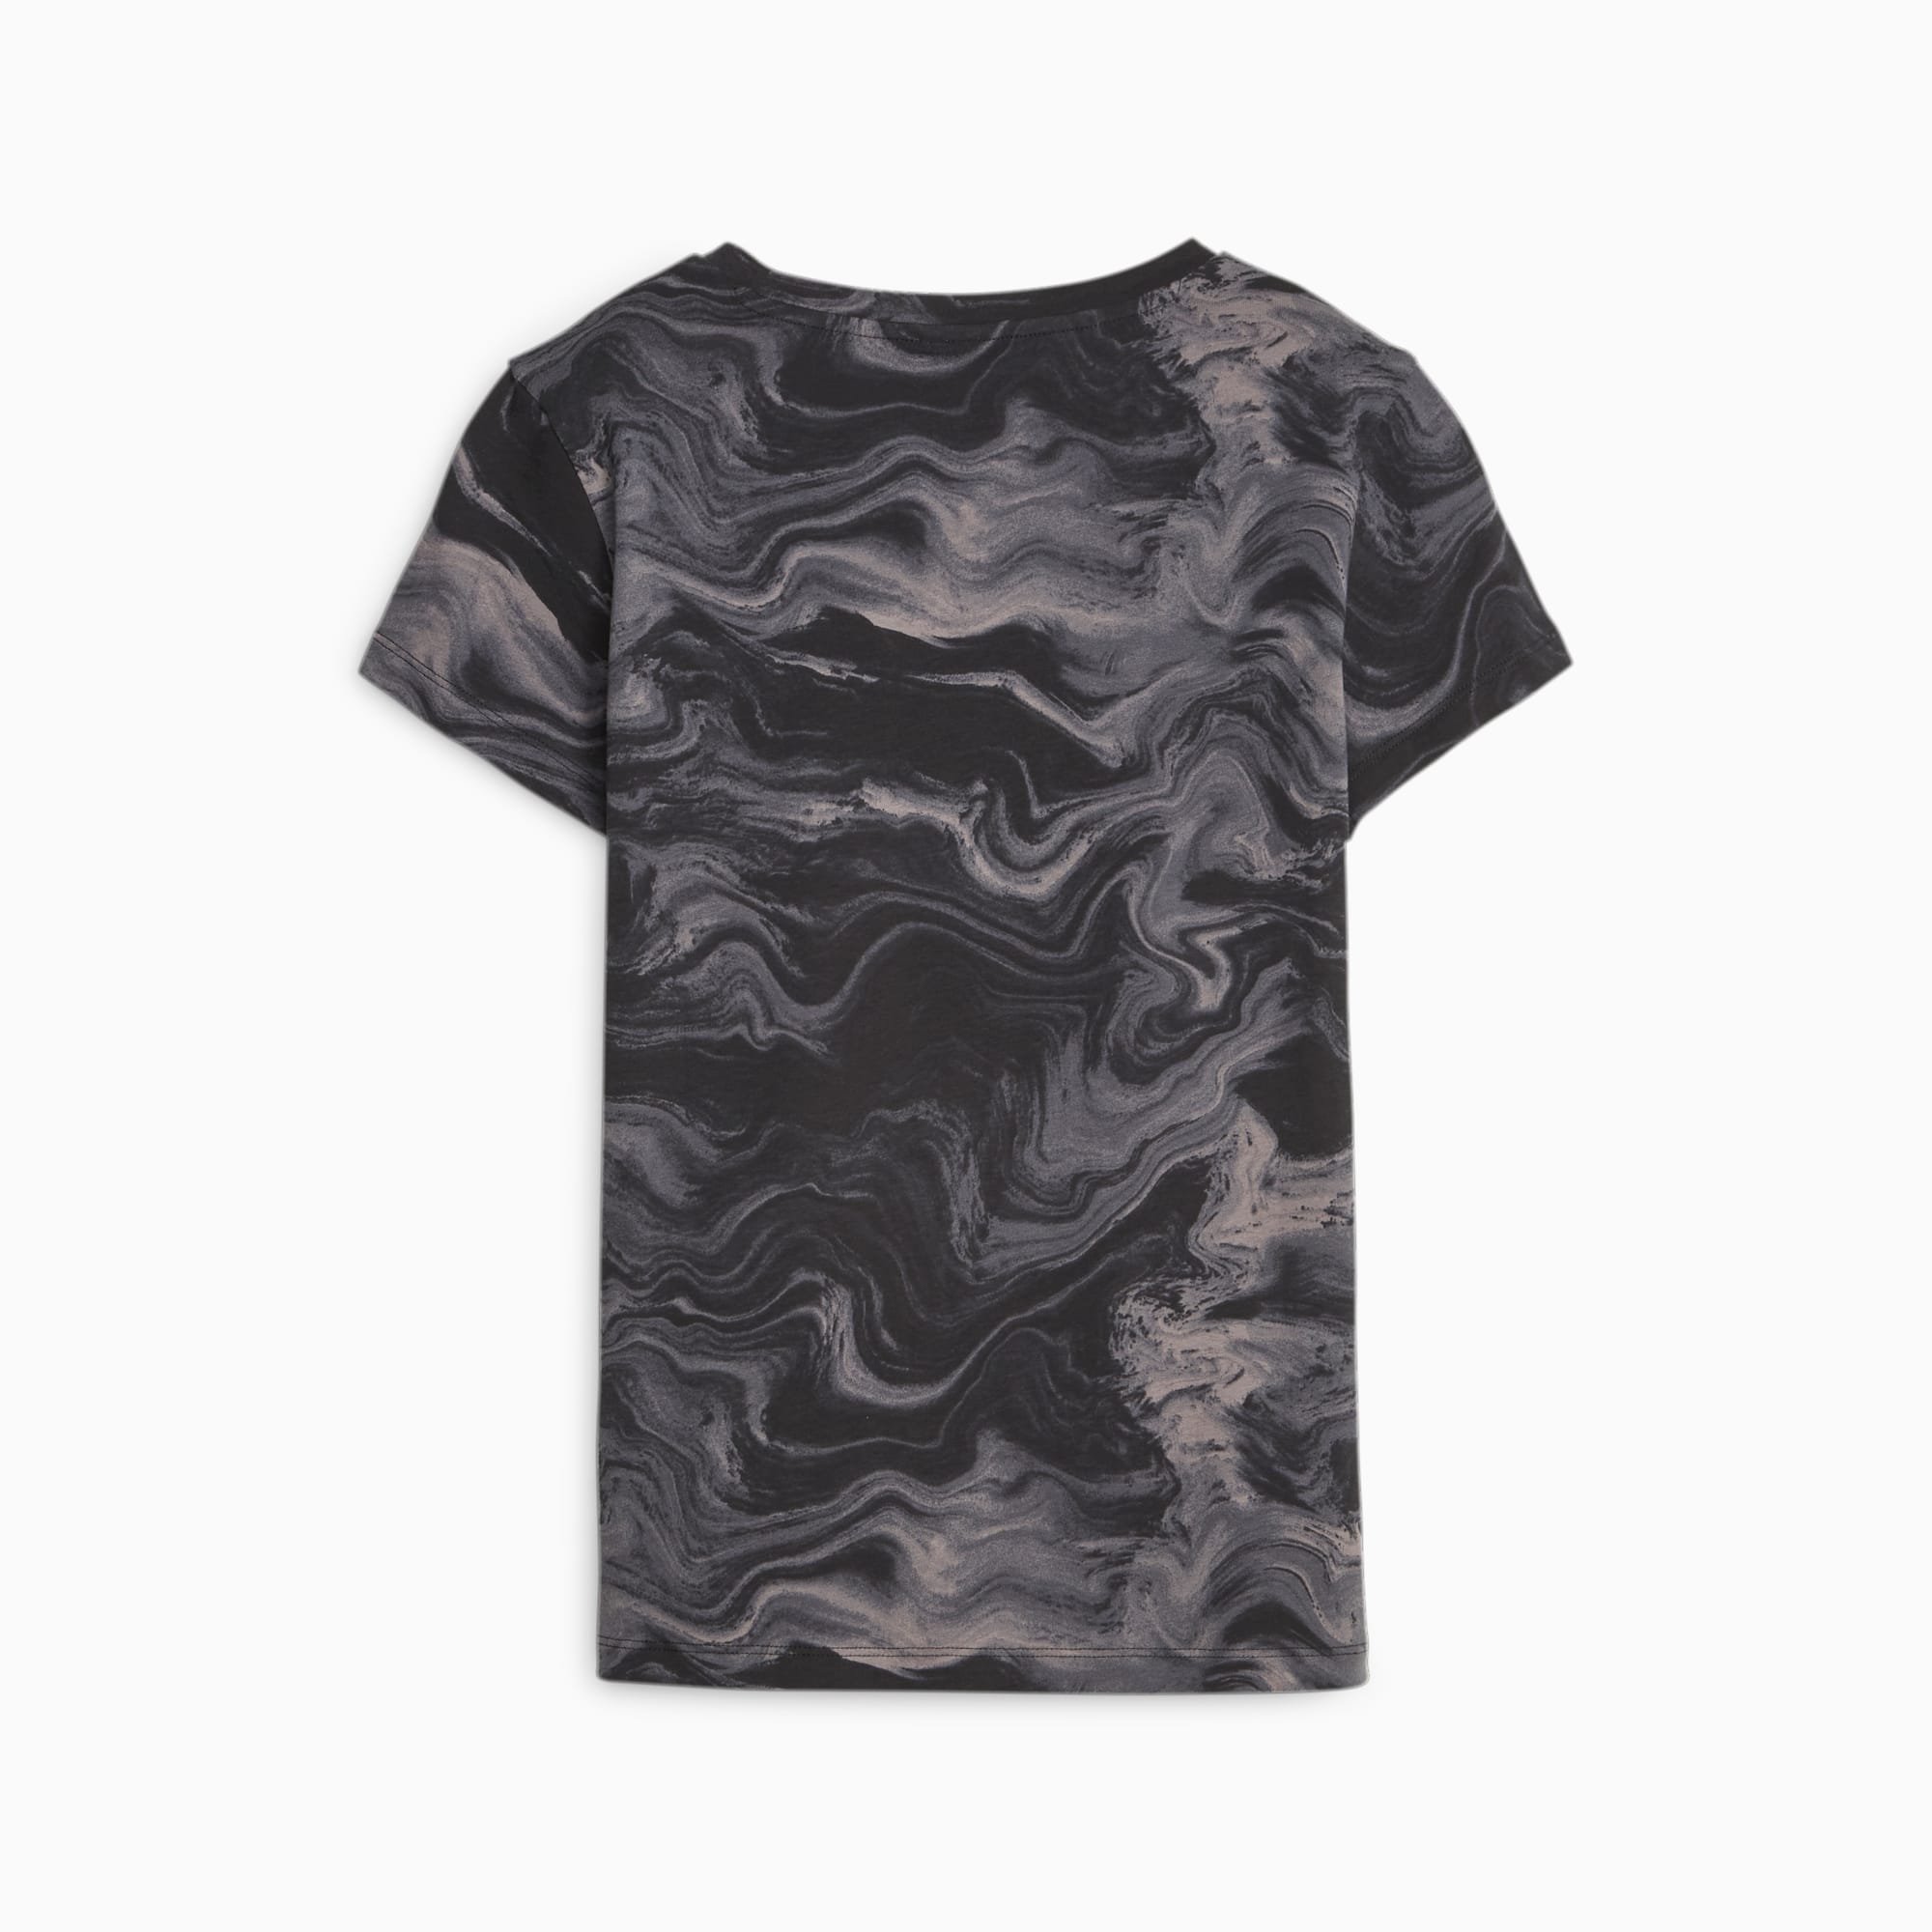 PUMA Ess+ Marbleized Women's T-Shirt, Black, Size XL, Clothing